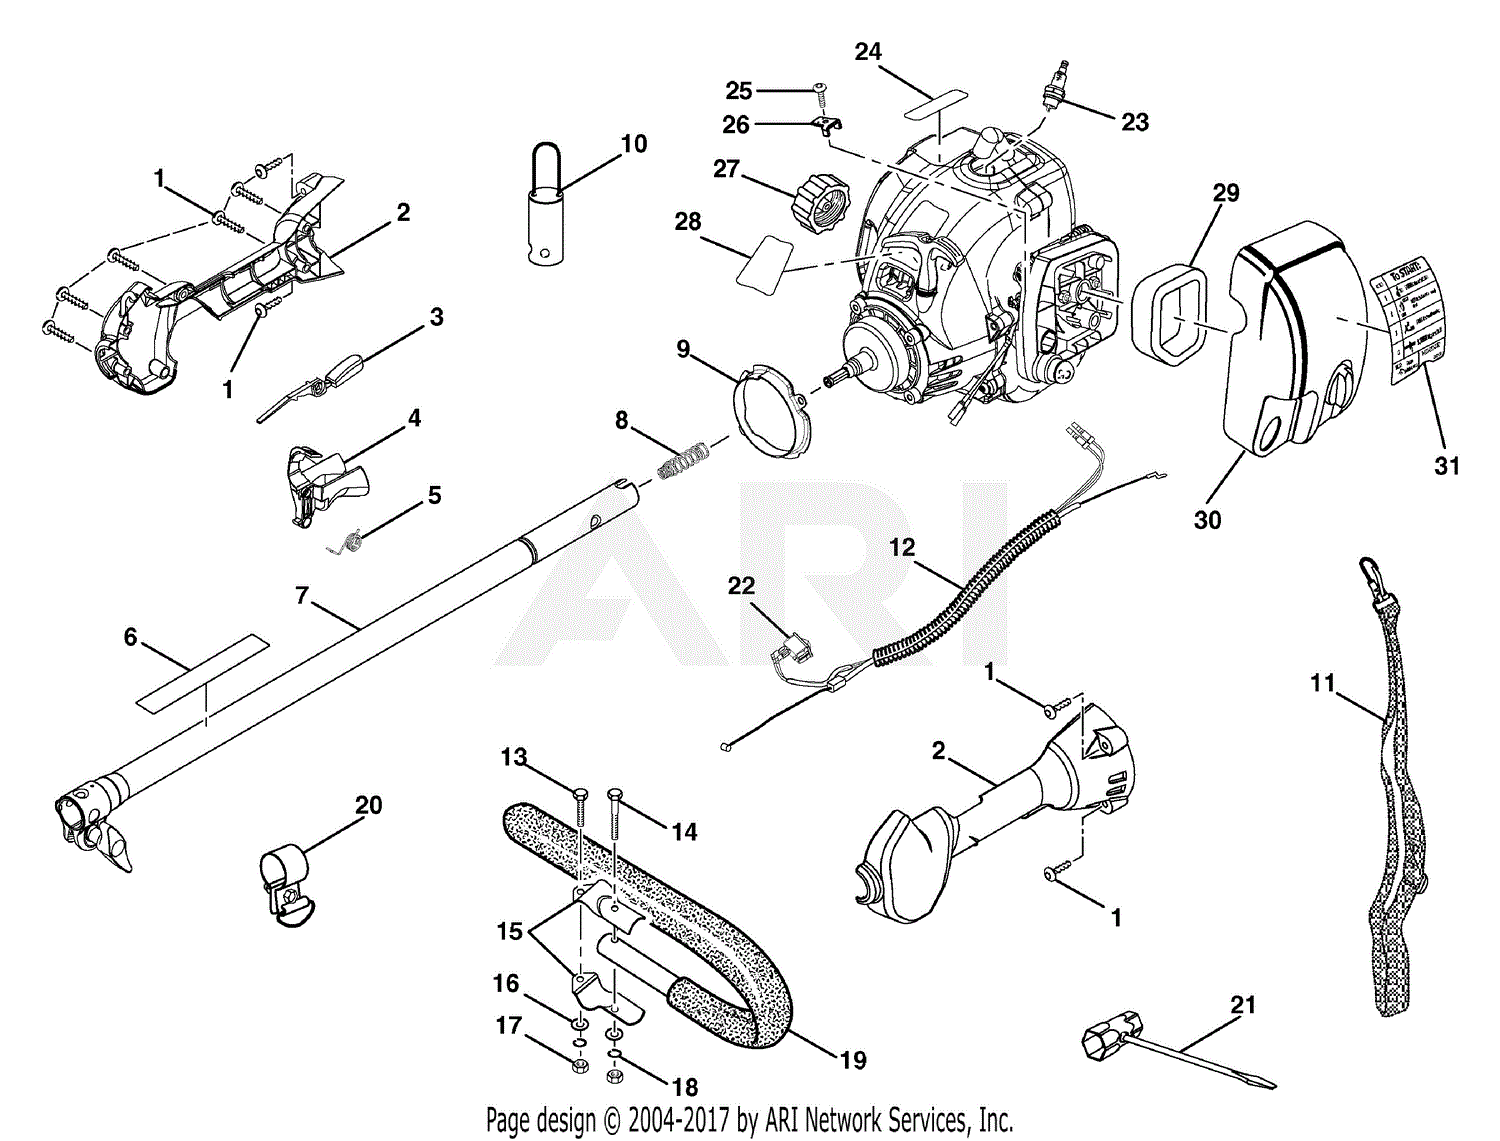 Homelite RY52004A Gas Pruner (TP30) Parts Diagram for Upper Handle ...